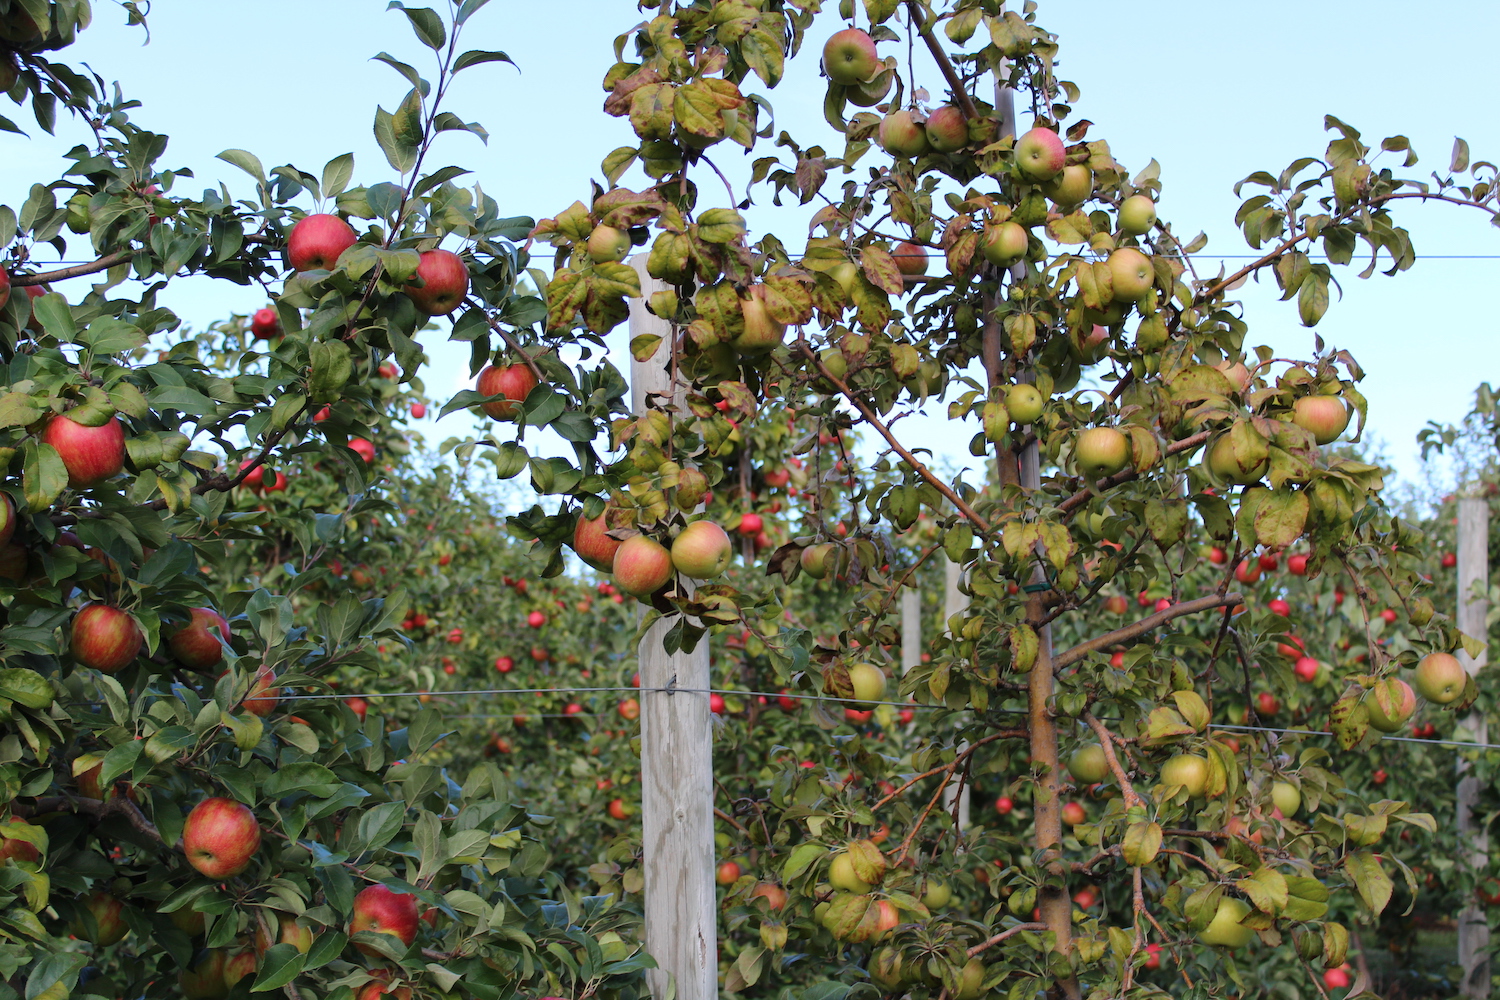 Declining apples